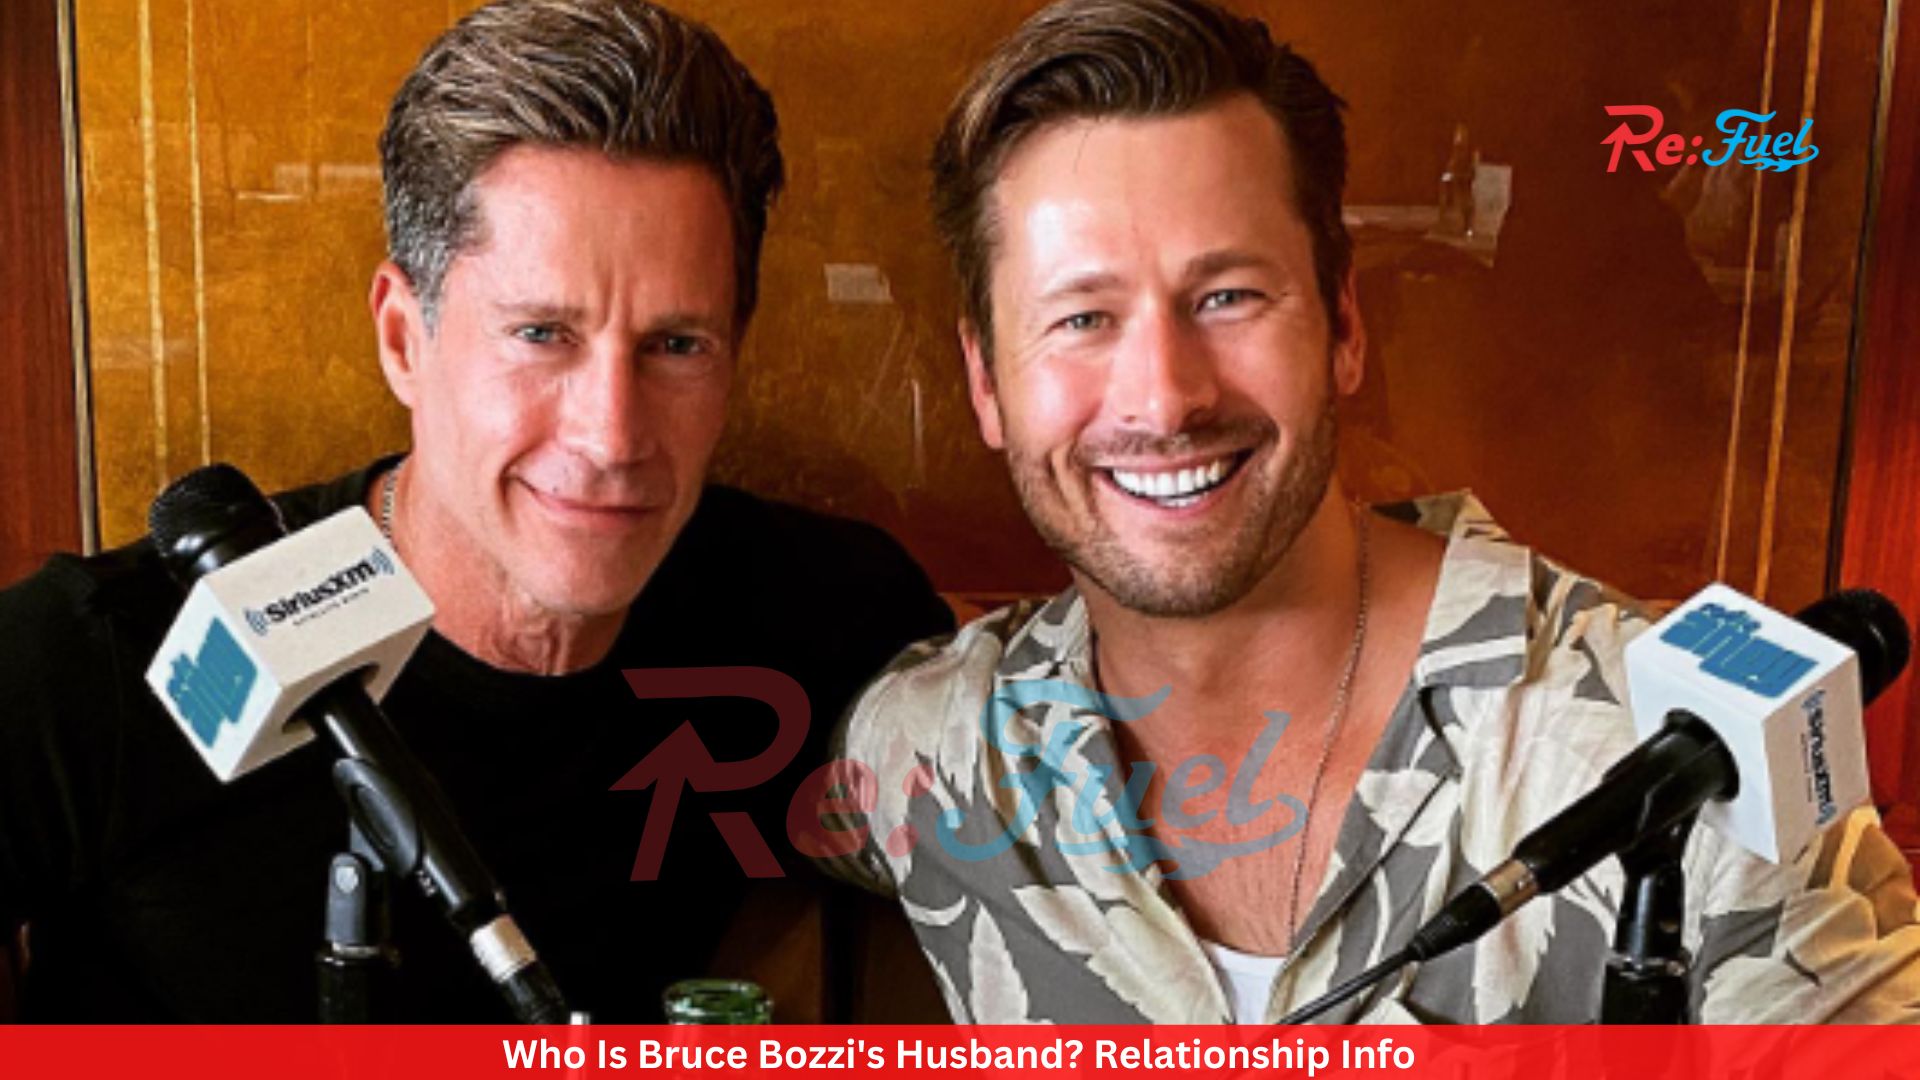 Who Is Bruce Bozzi's Husband? Relationship Info